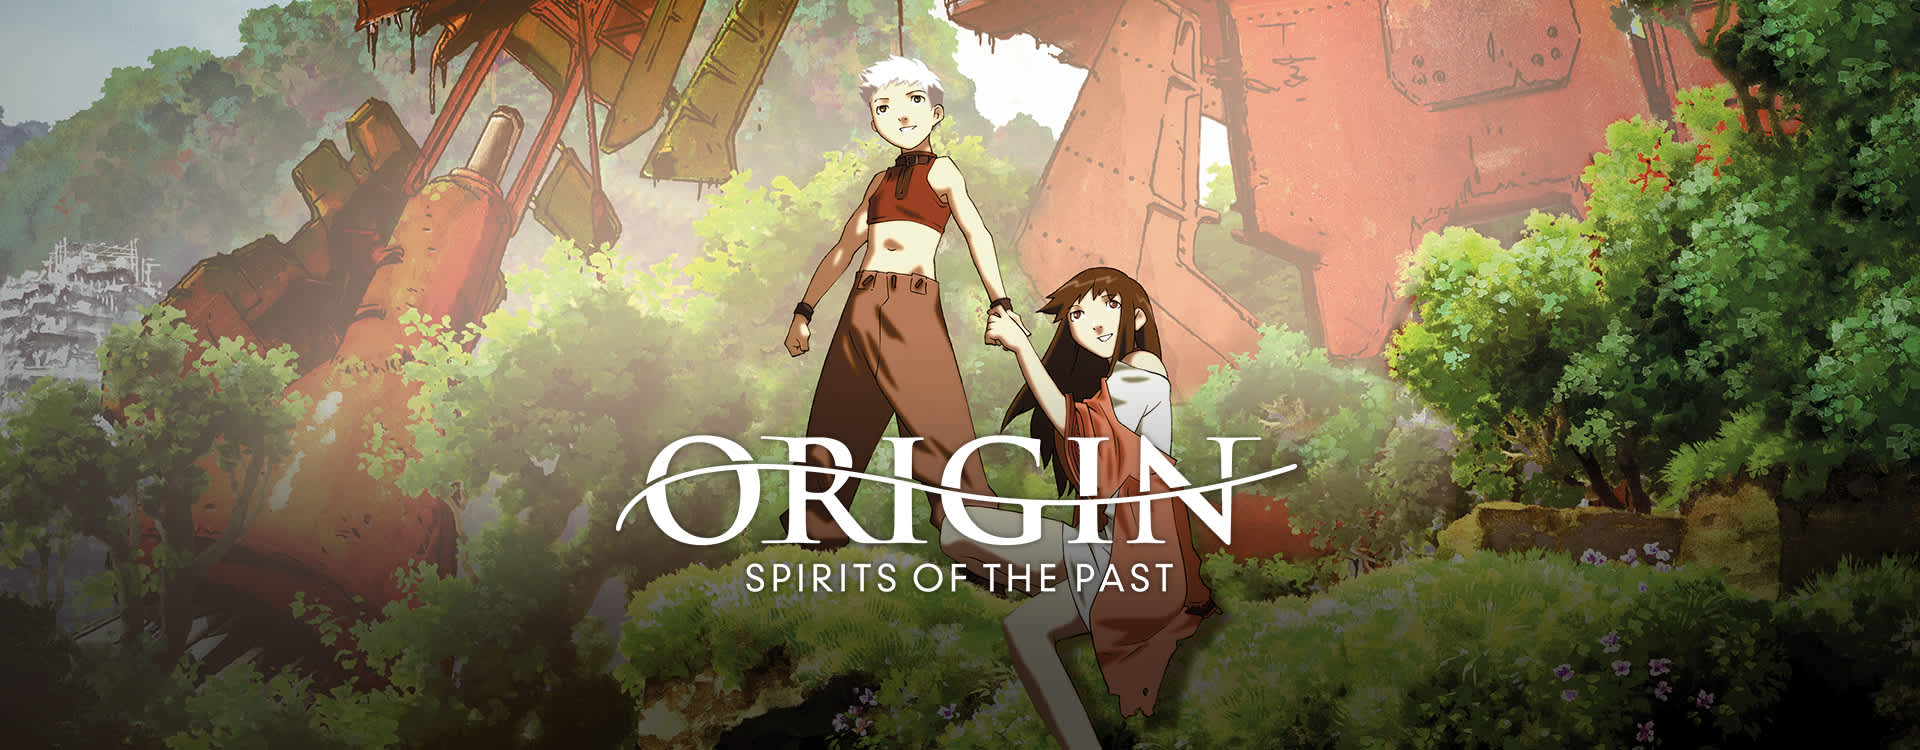 Origin: Spirits of the Past Movie Review | Common Sense Media